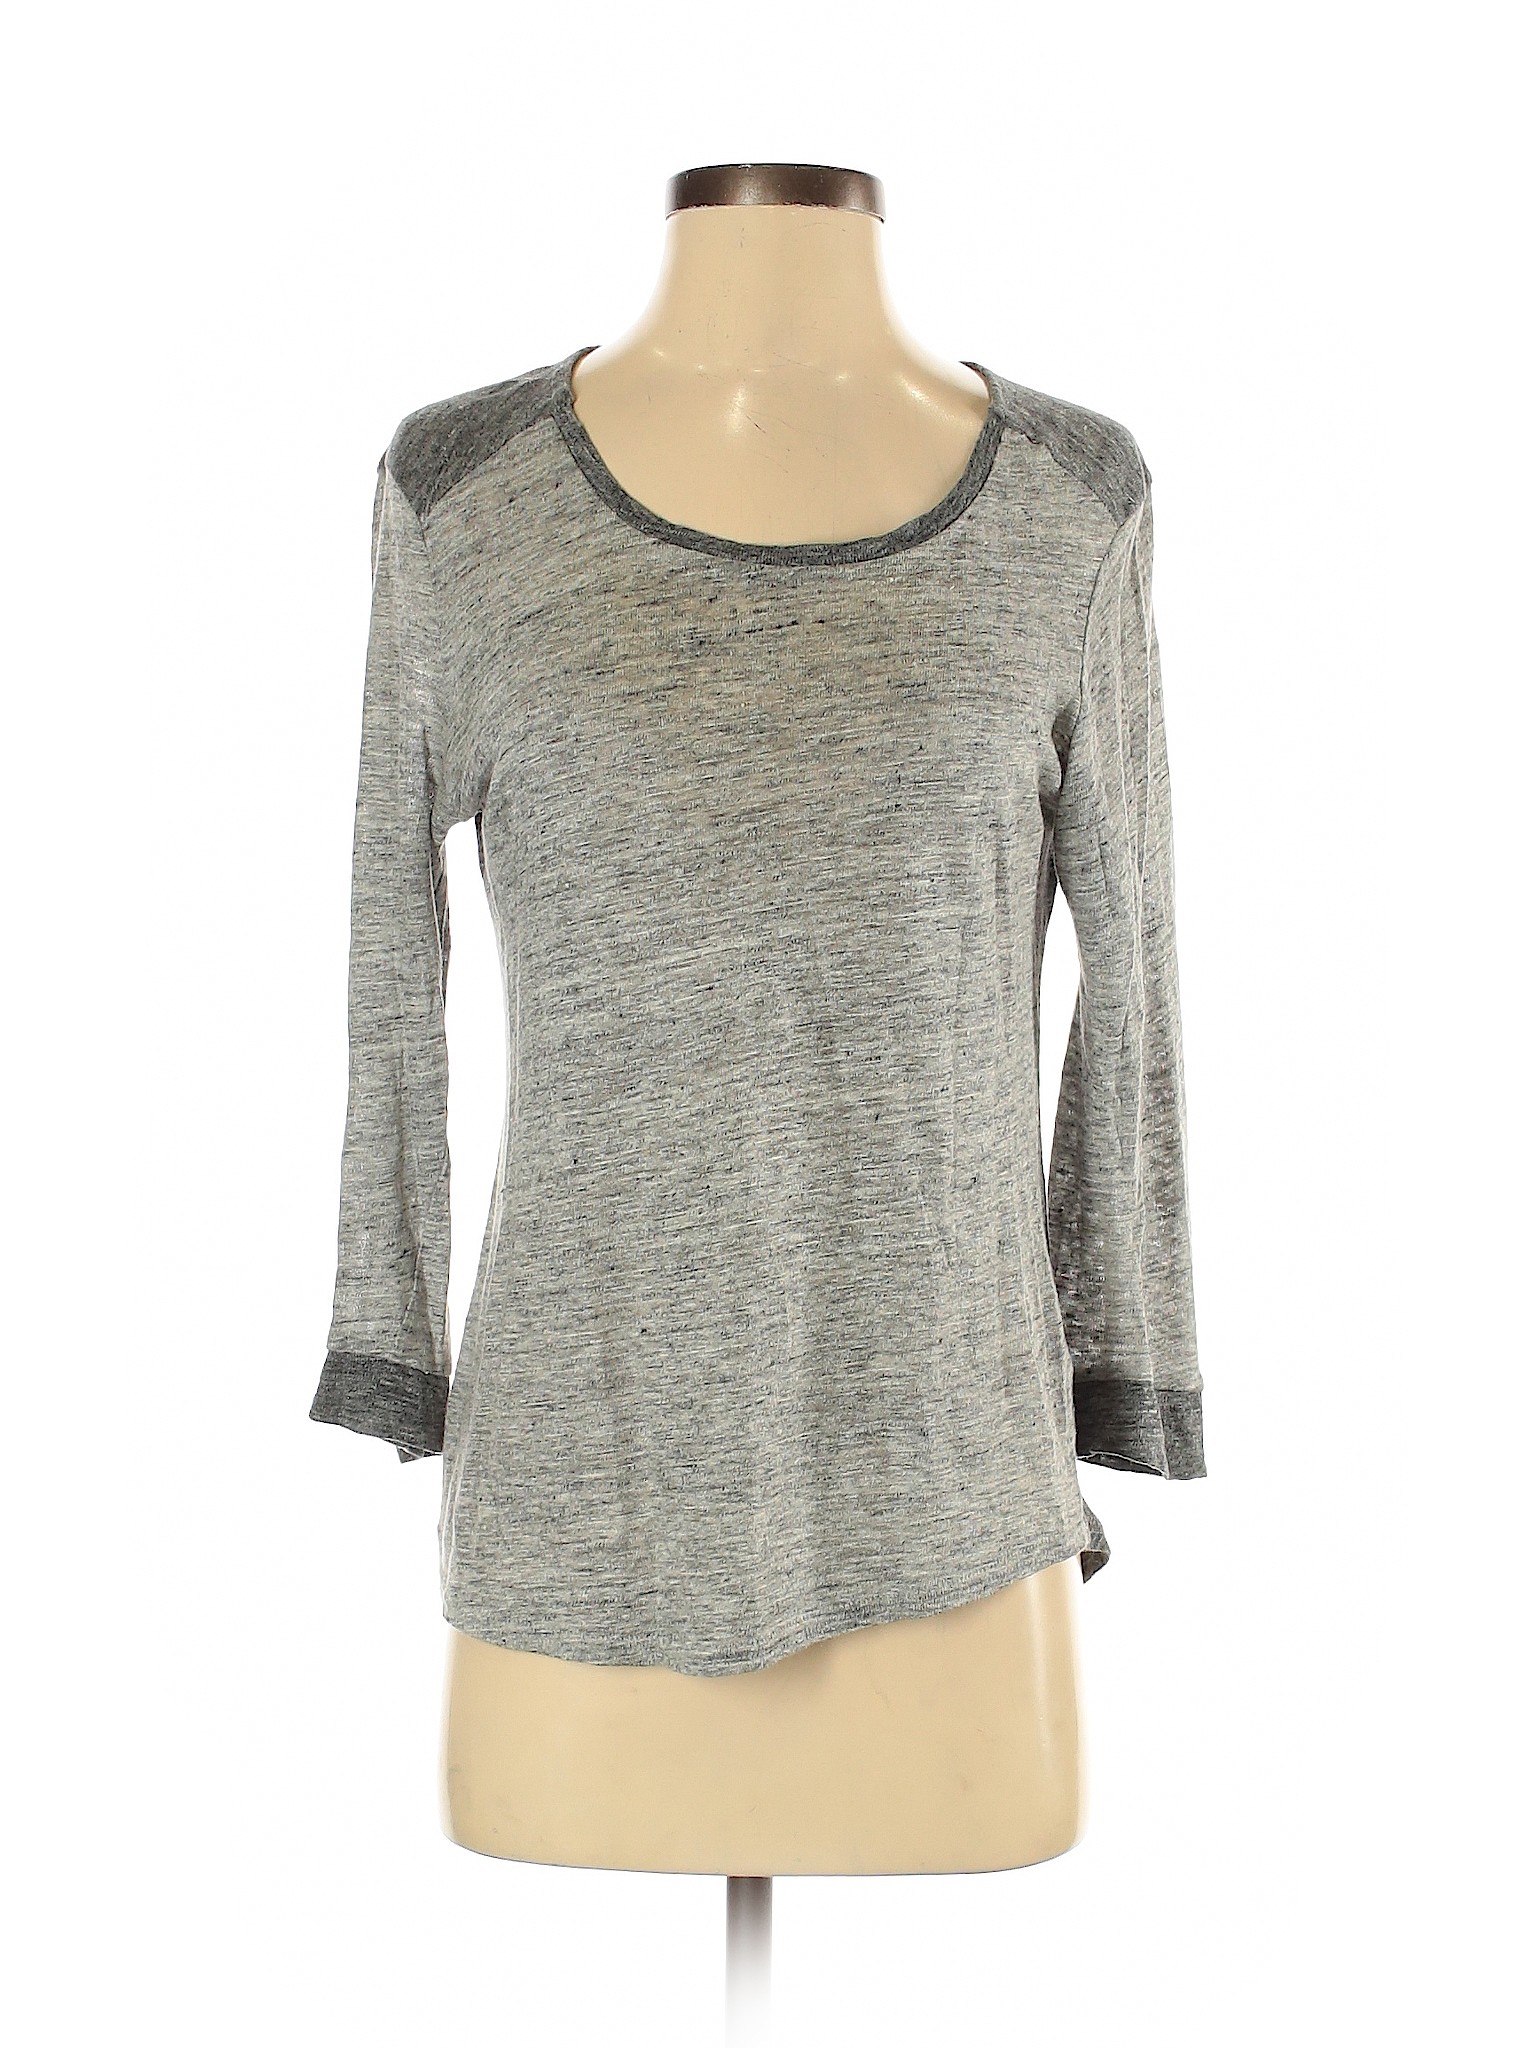 Philosophy Republic Clothing Women Gray 3/4 Sleeve T-Shirt S | eBay